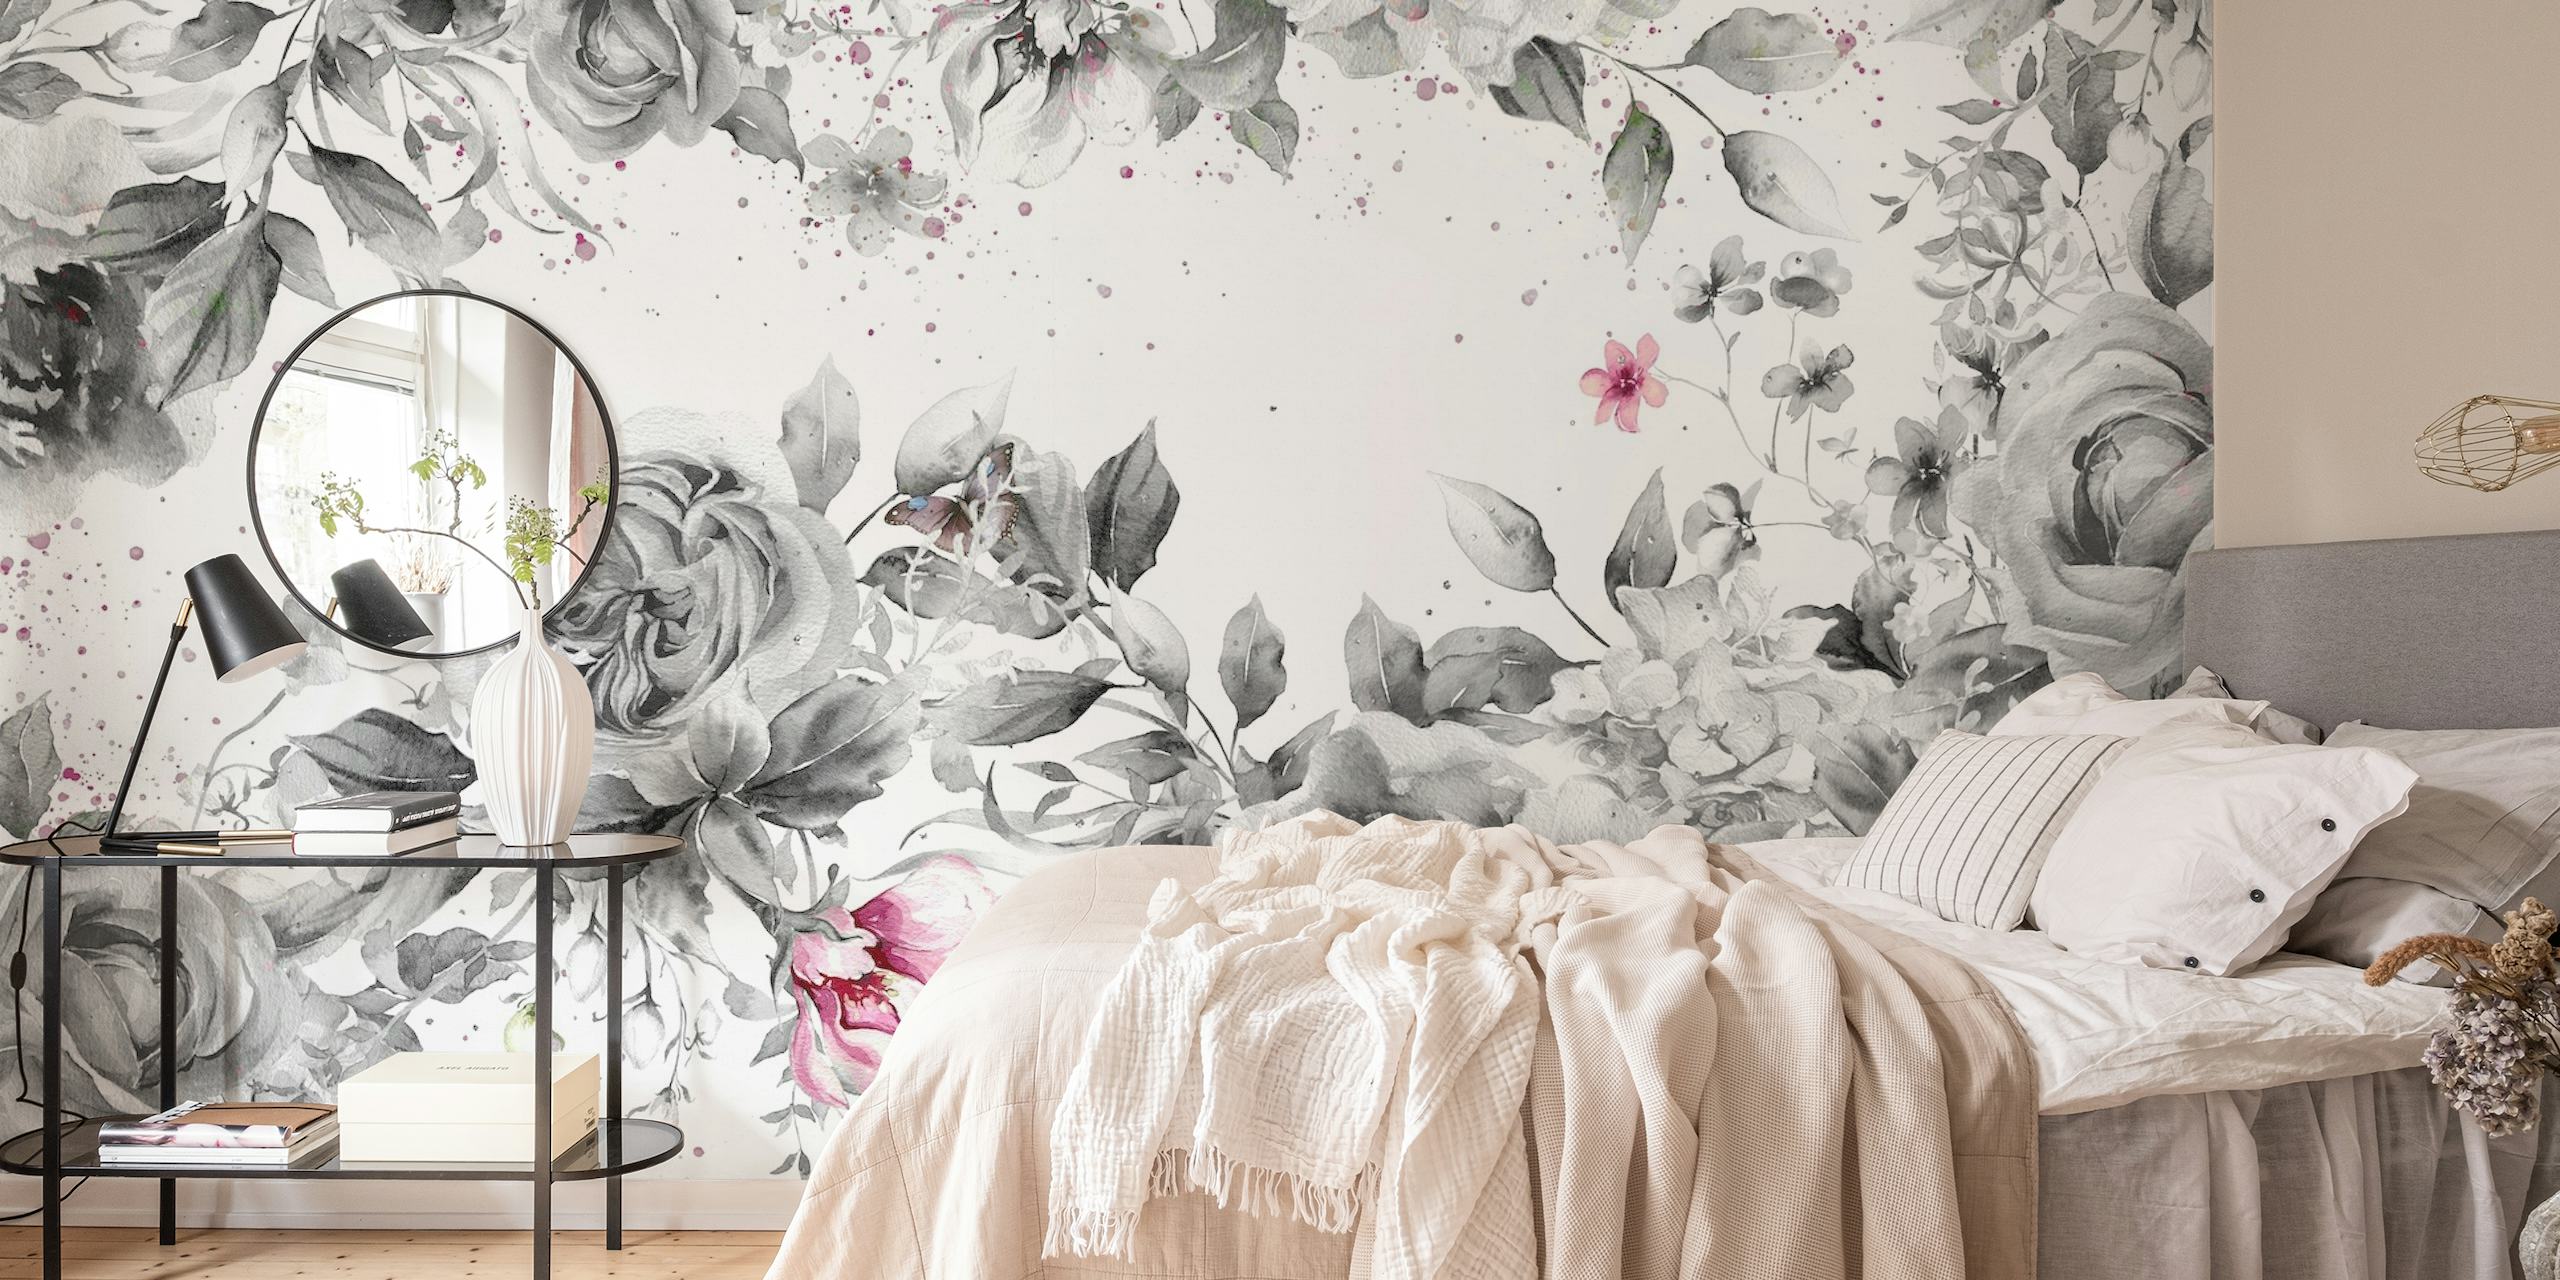 Elegante zilveren glitterrozen muurschildering met subtiele kleuraccenten